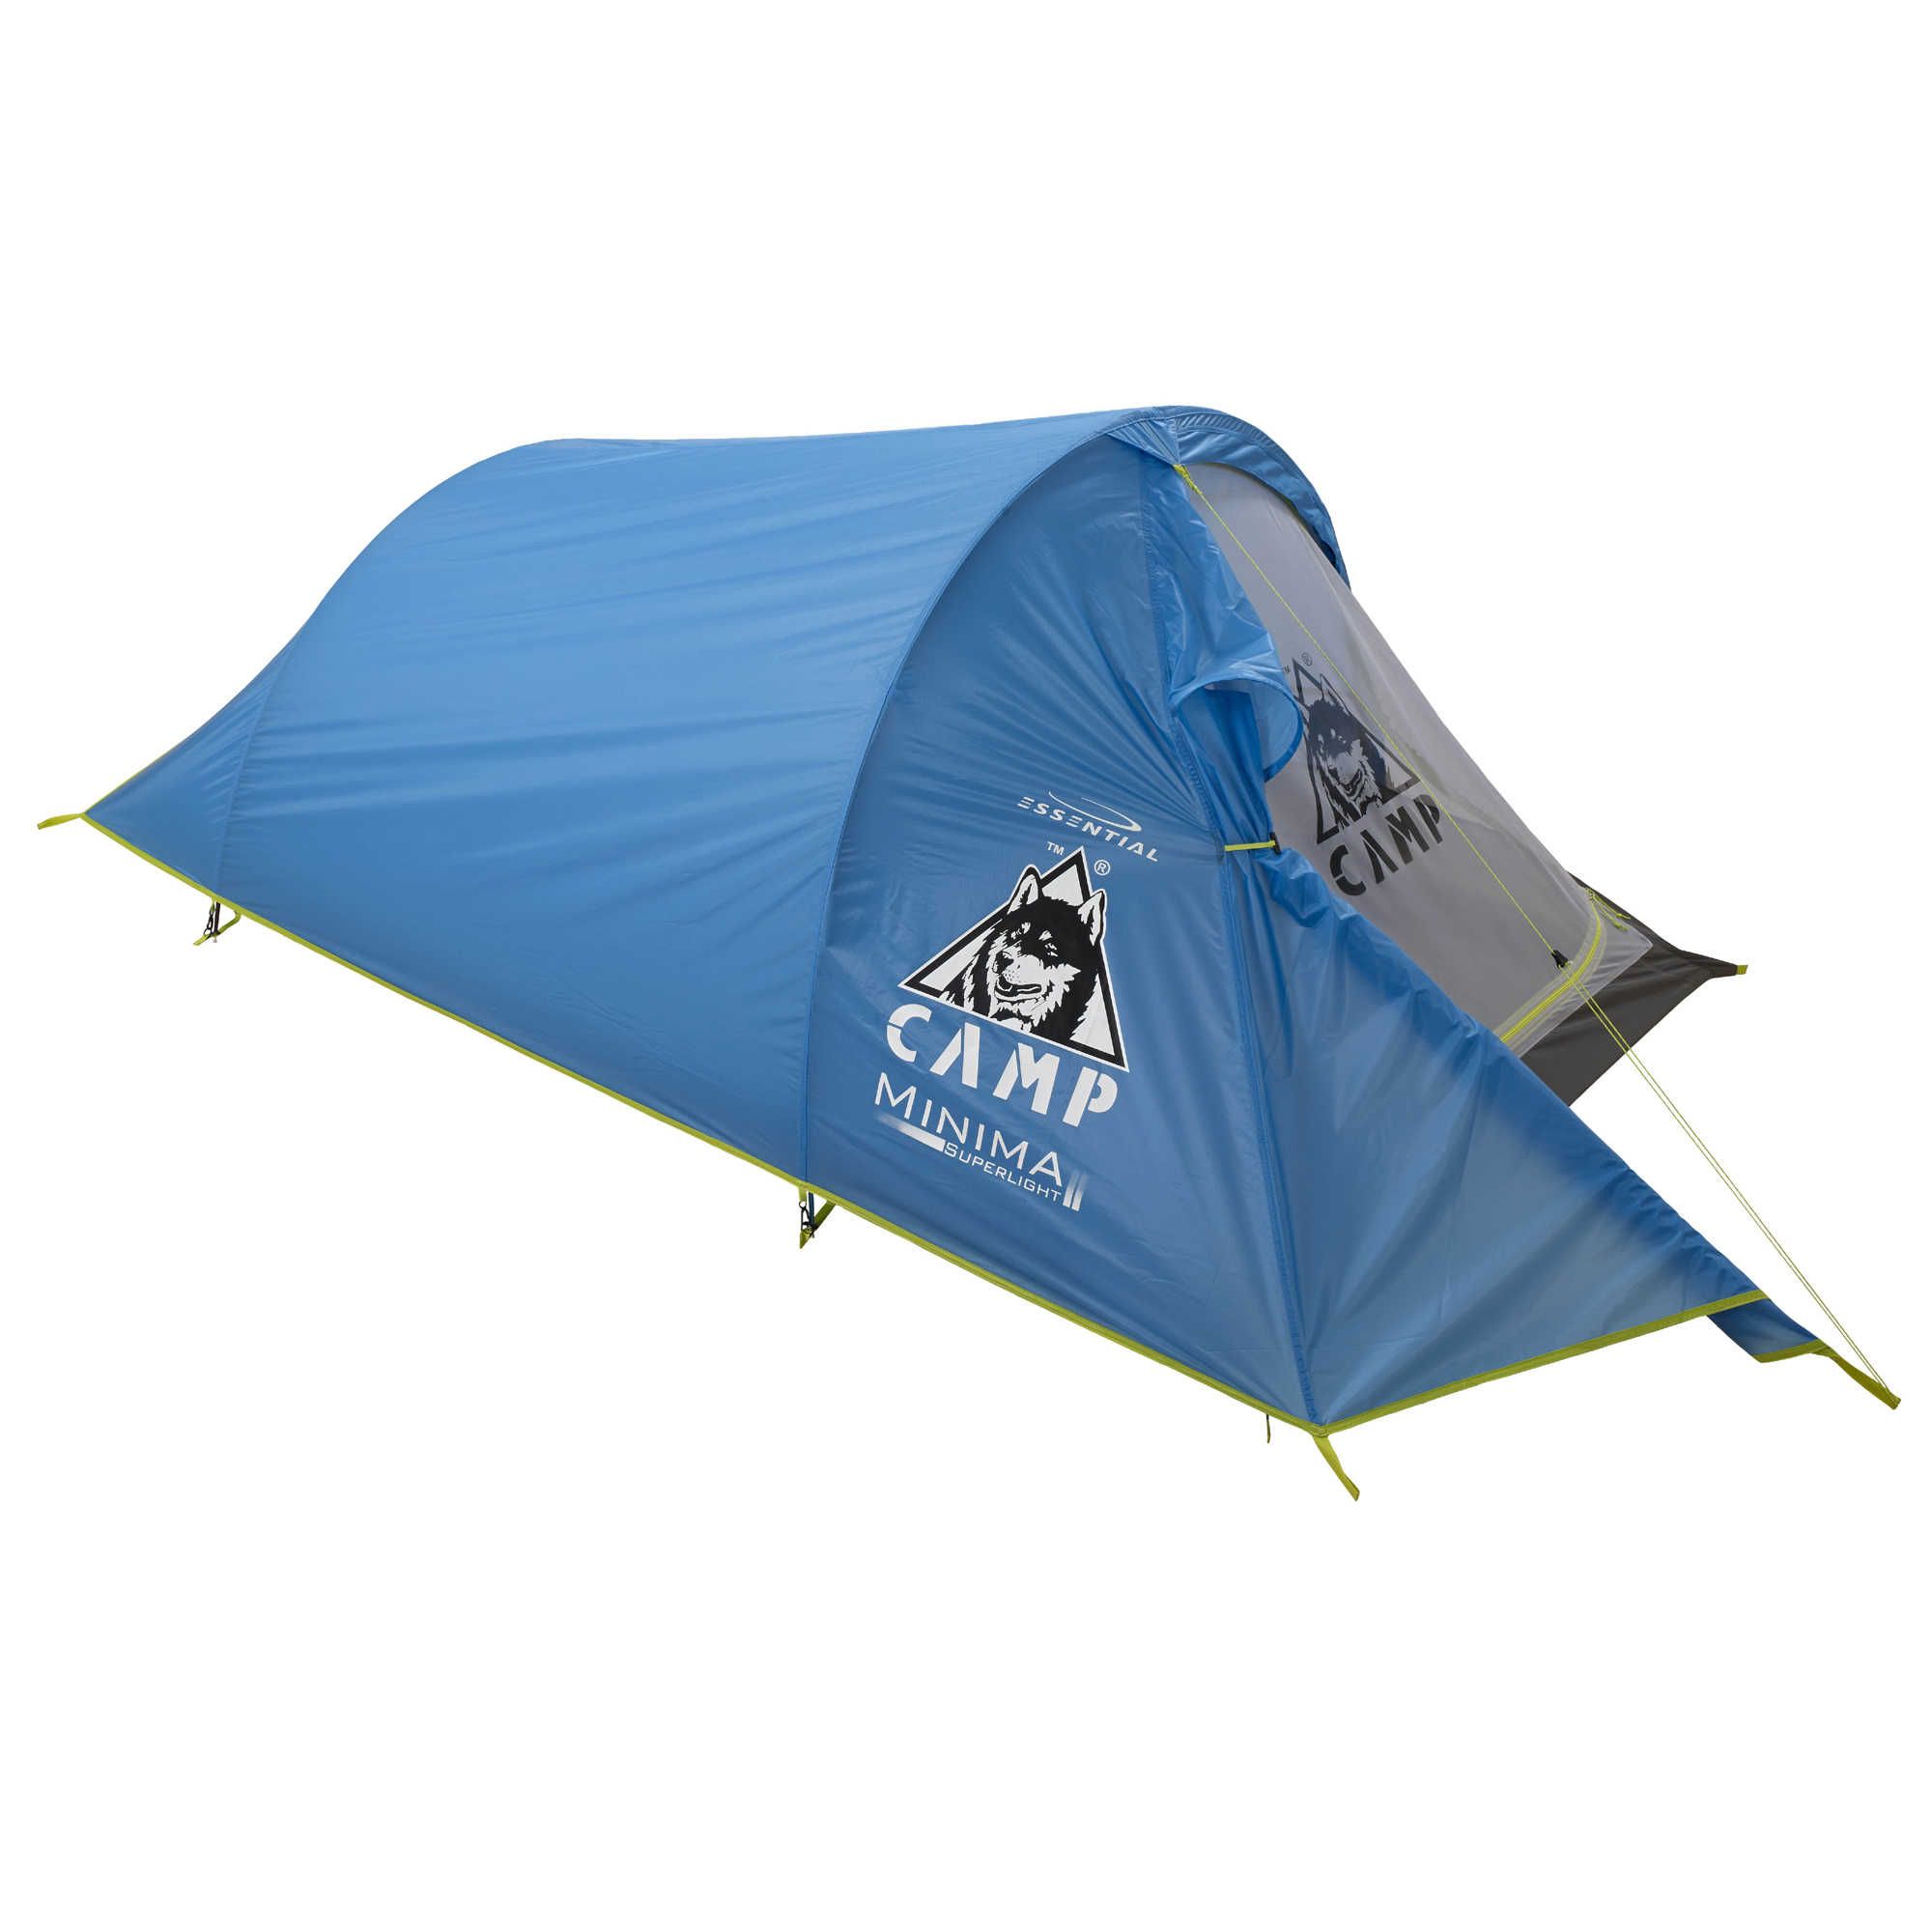 Tente Camp Minima 2 SL - Bleu 2018